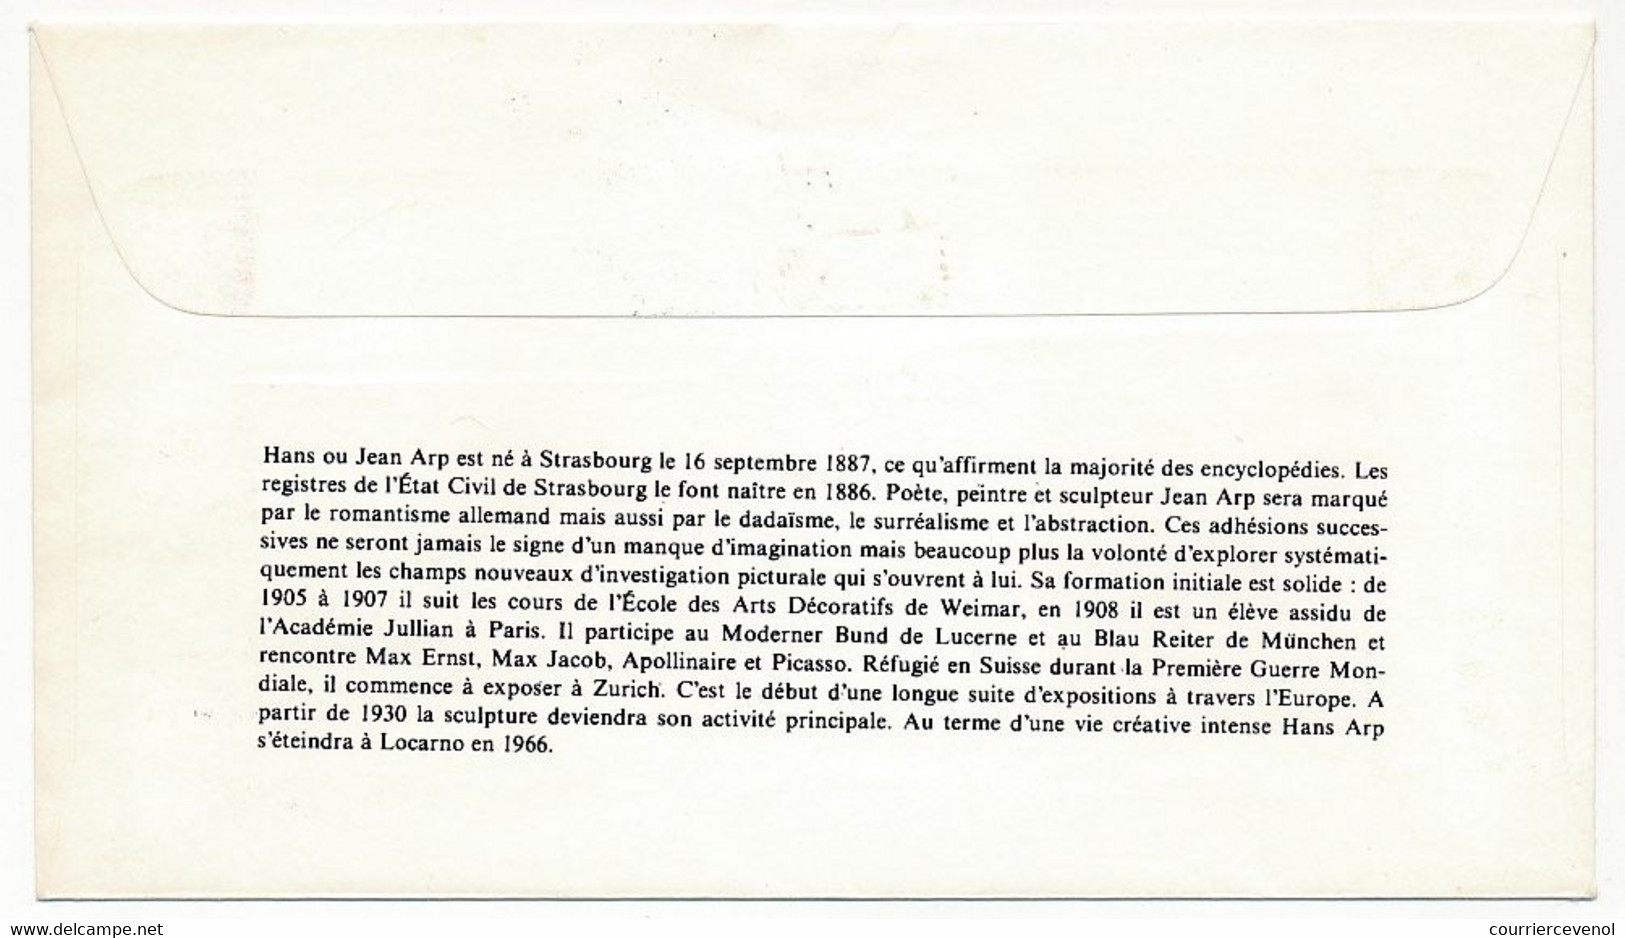 FRANCE => Enveloppe FDC - 5,00 La Danseuse ARP - 8 Novembre 1986 - Strasbourg + Conseil De L'Europe - 1980-1989